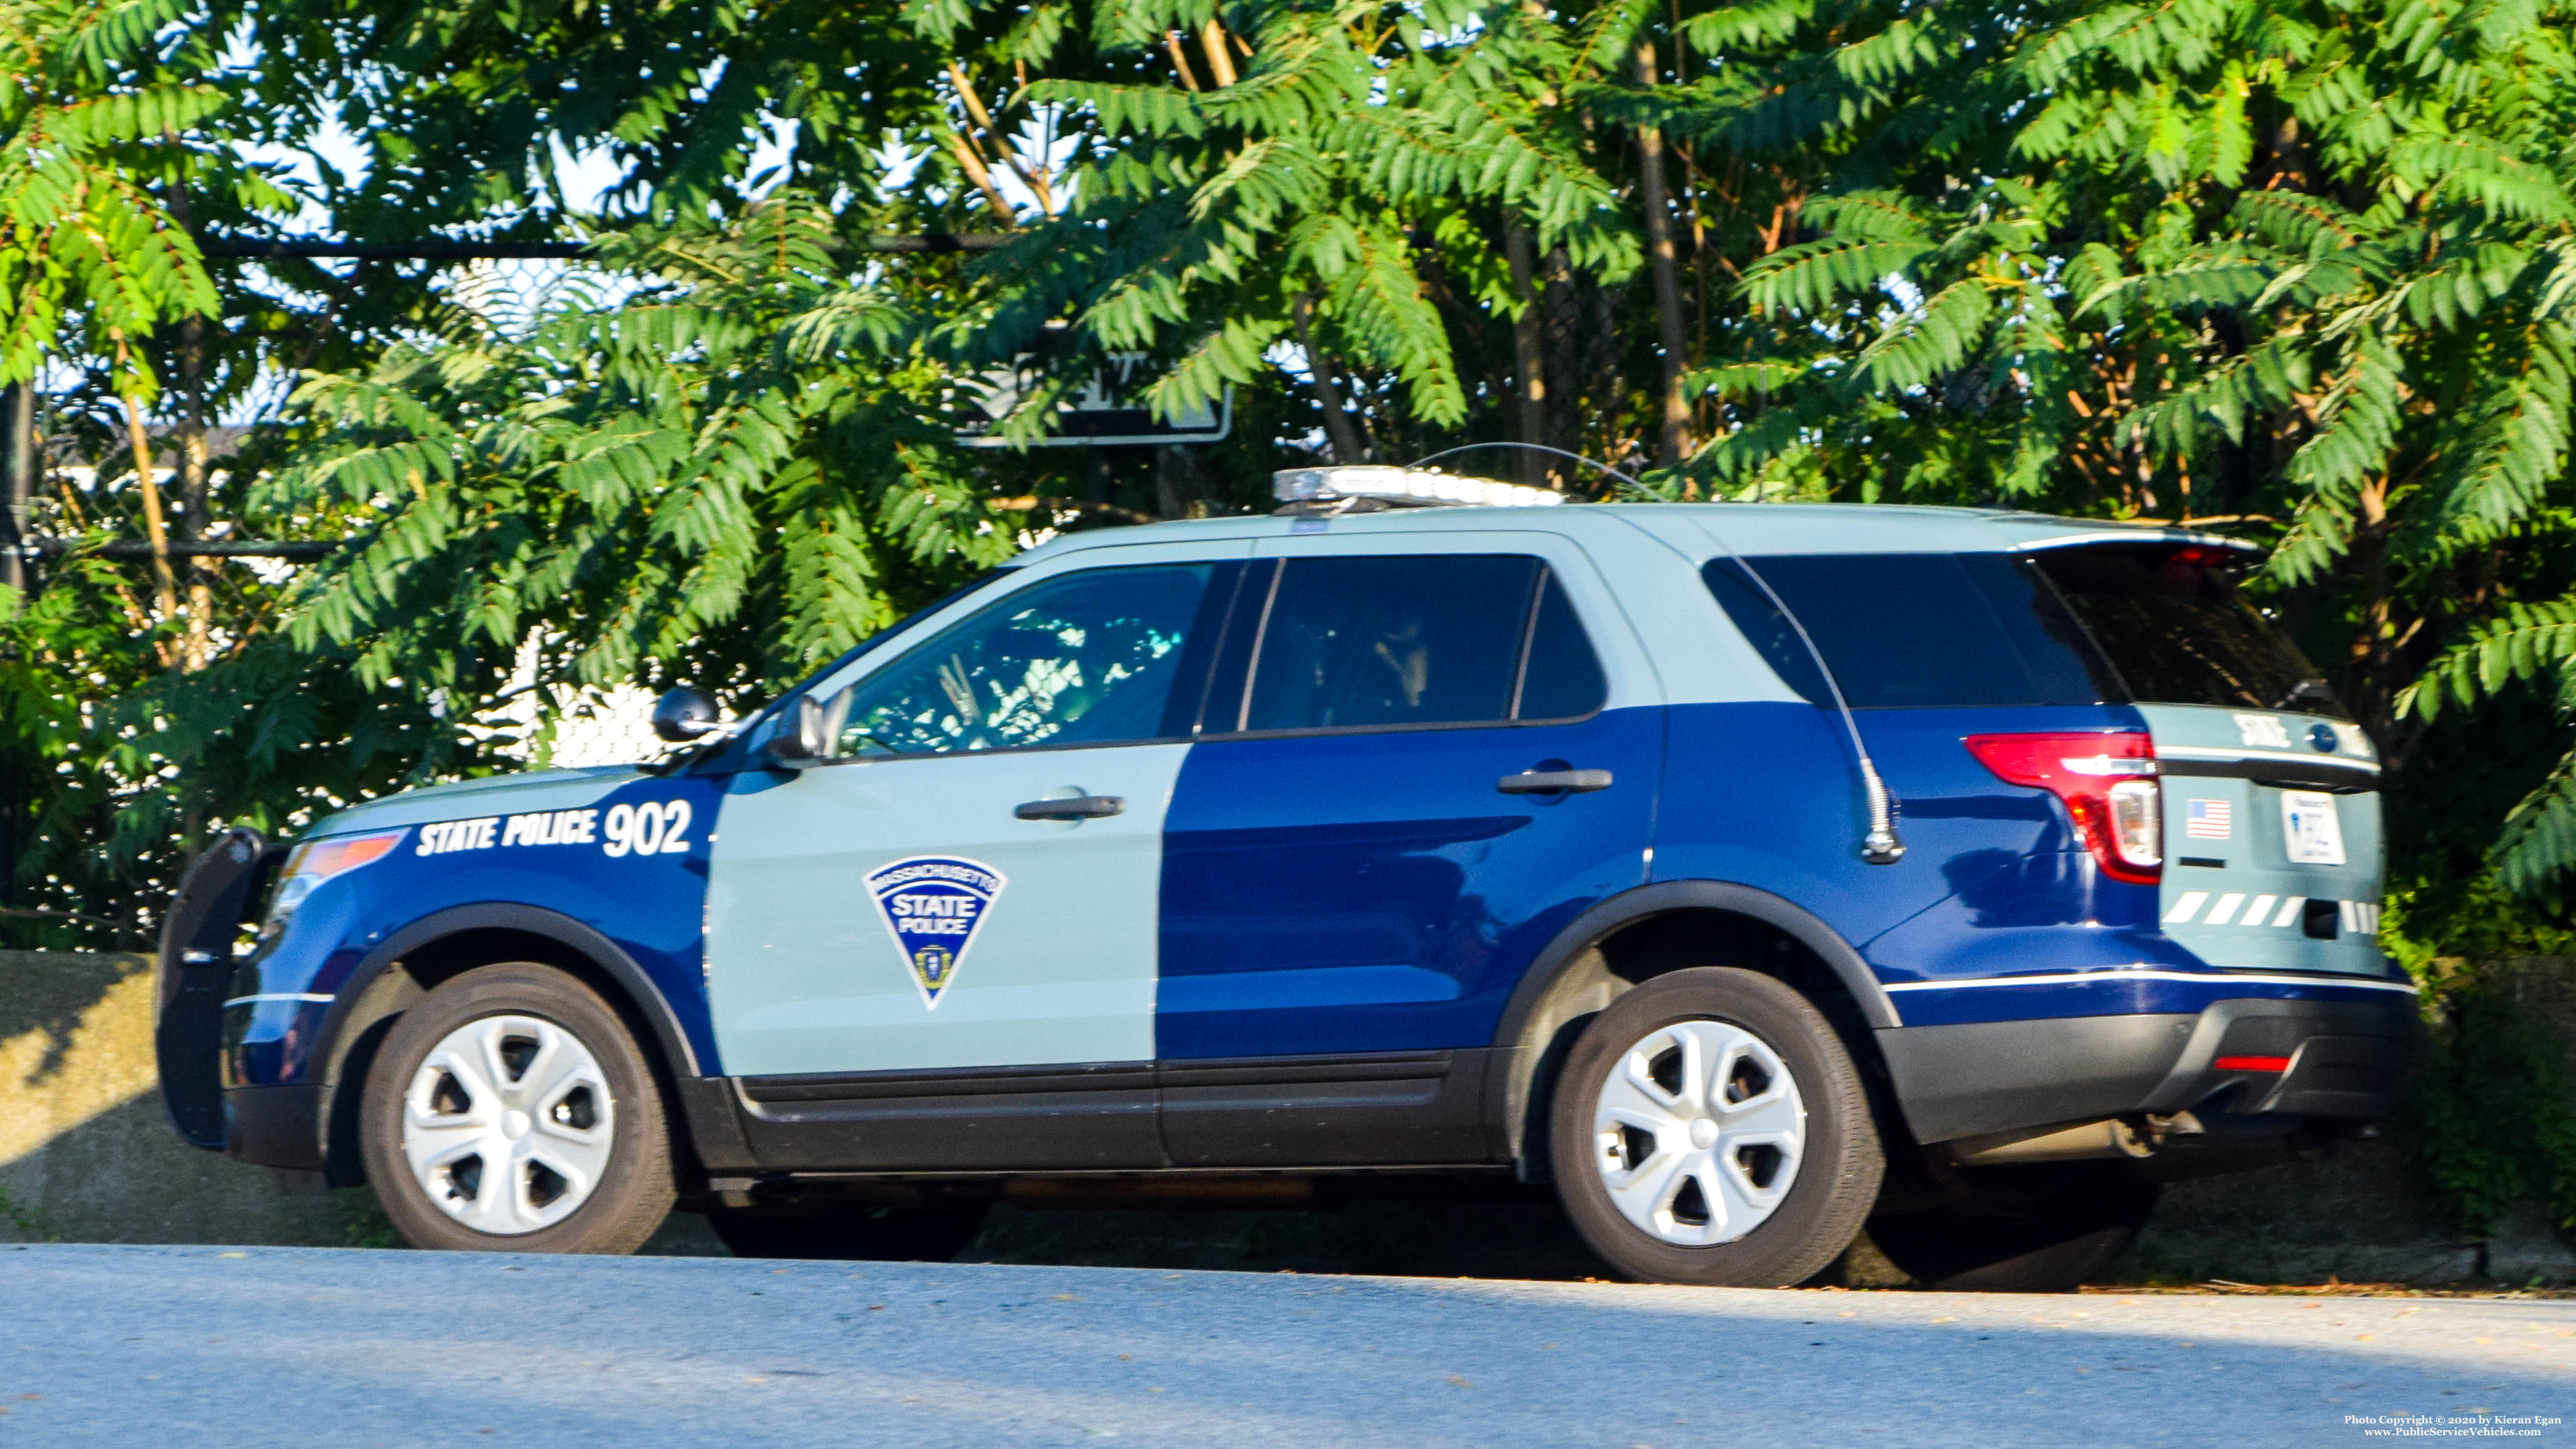 A photo  of Massachusetts State Police
            Cruiser 902, a 2015 Ford Police Interceptor Utility             taken by Kieran Egan